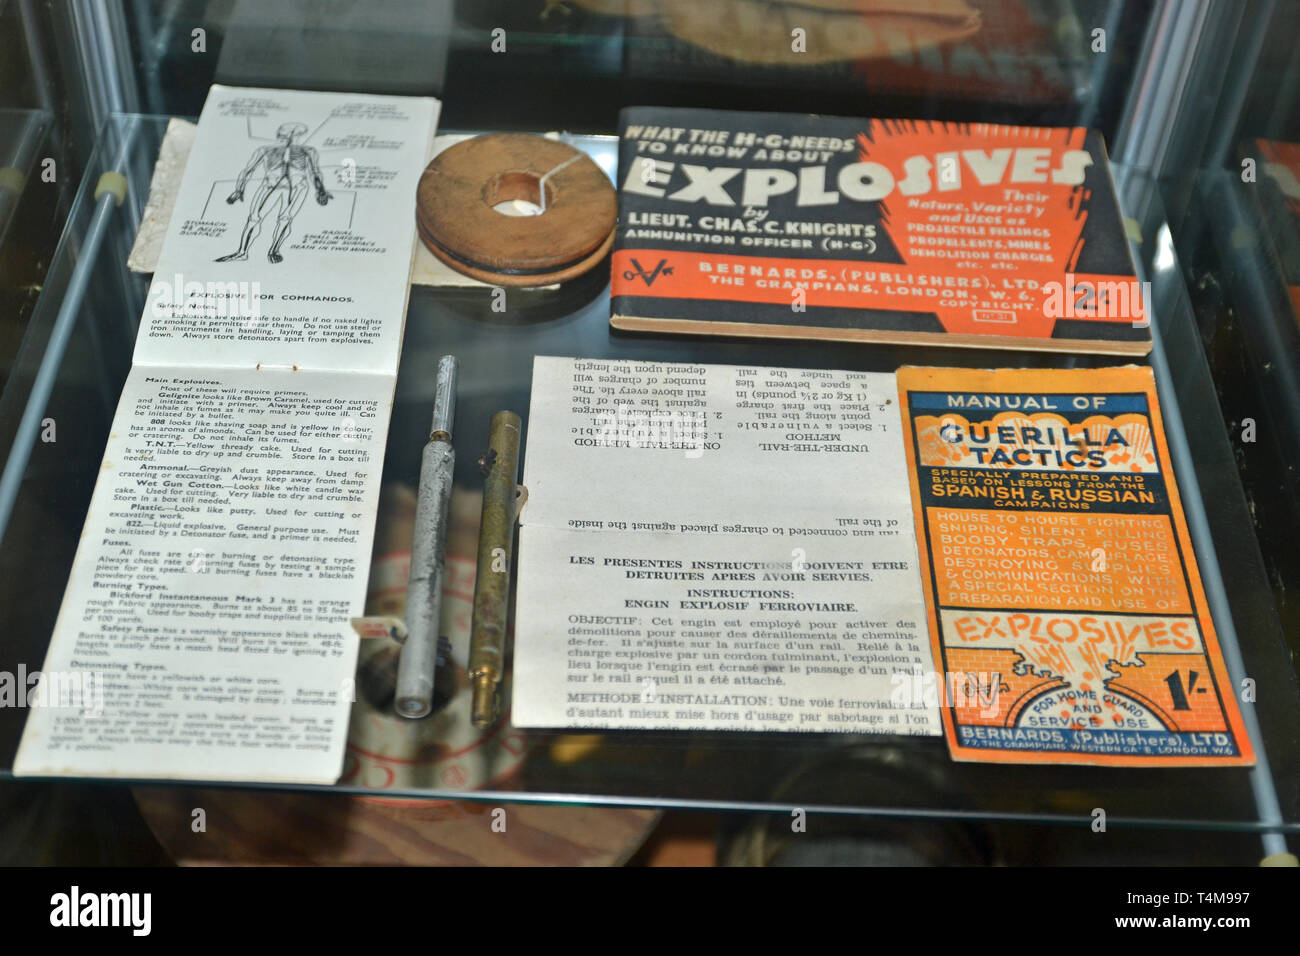 Tattiche di guerriglia e gli esplosivi di opuscoli a Parham Airfield Museum, Framlingham, Suffolk, Inghilterra, Regno Unito Foto Stock